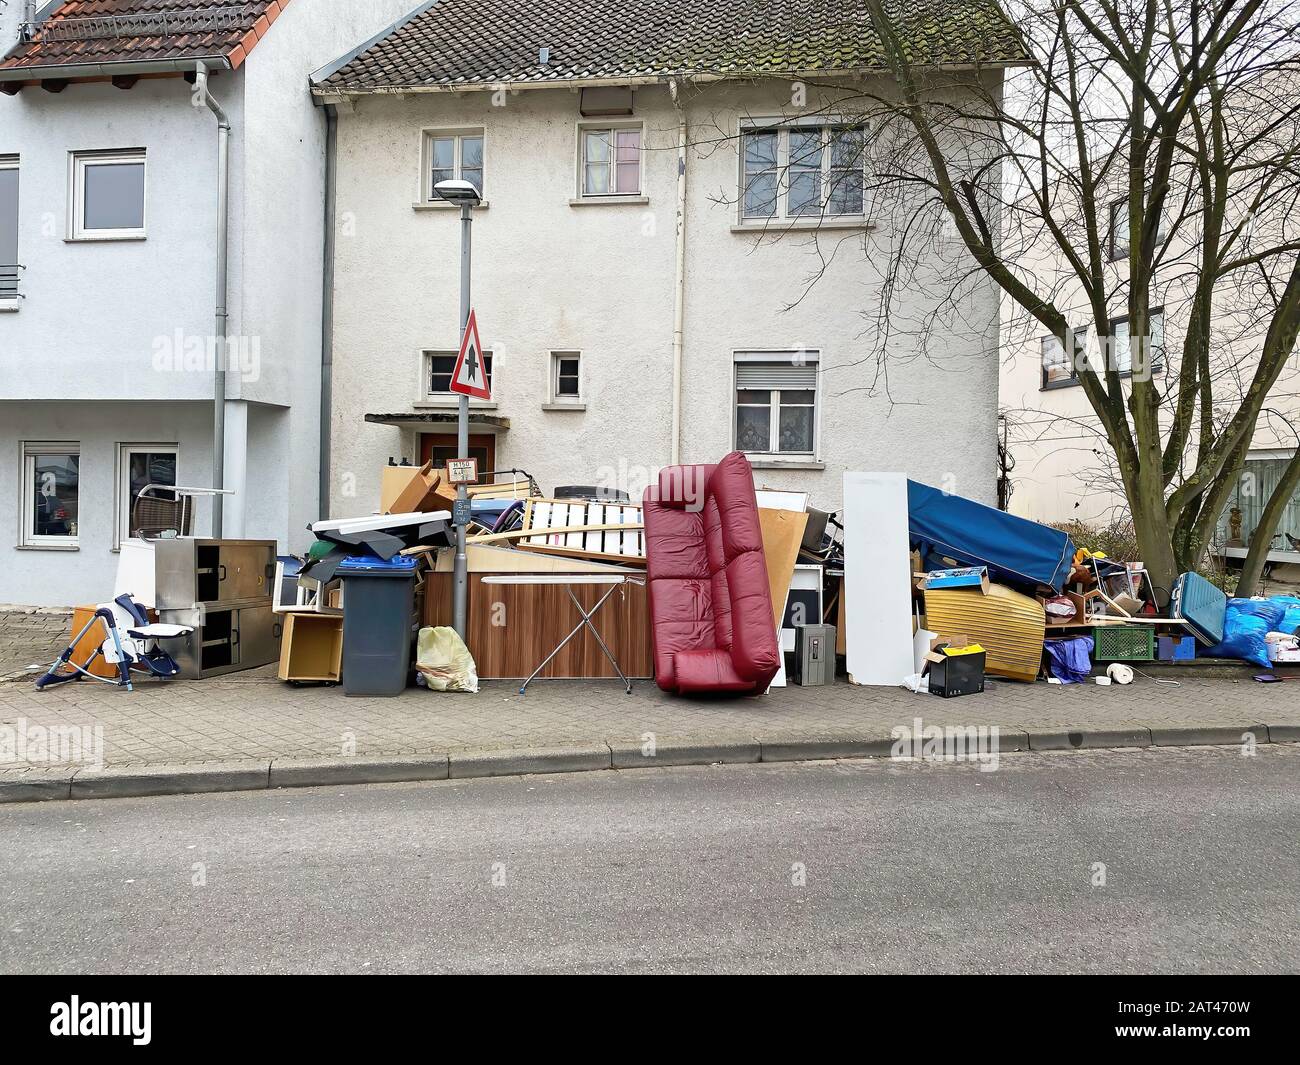 Bulk rubbish on a house Stock Photo